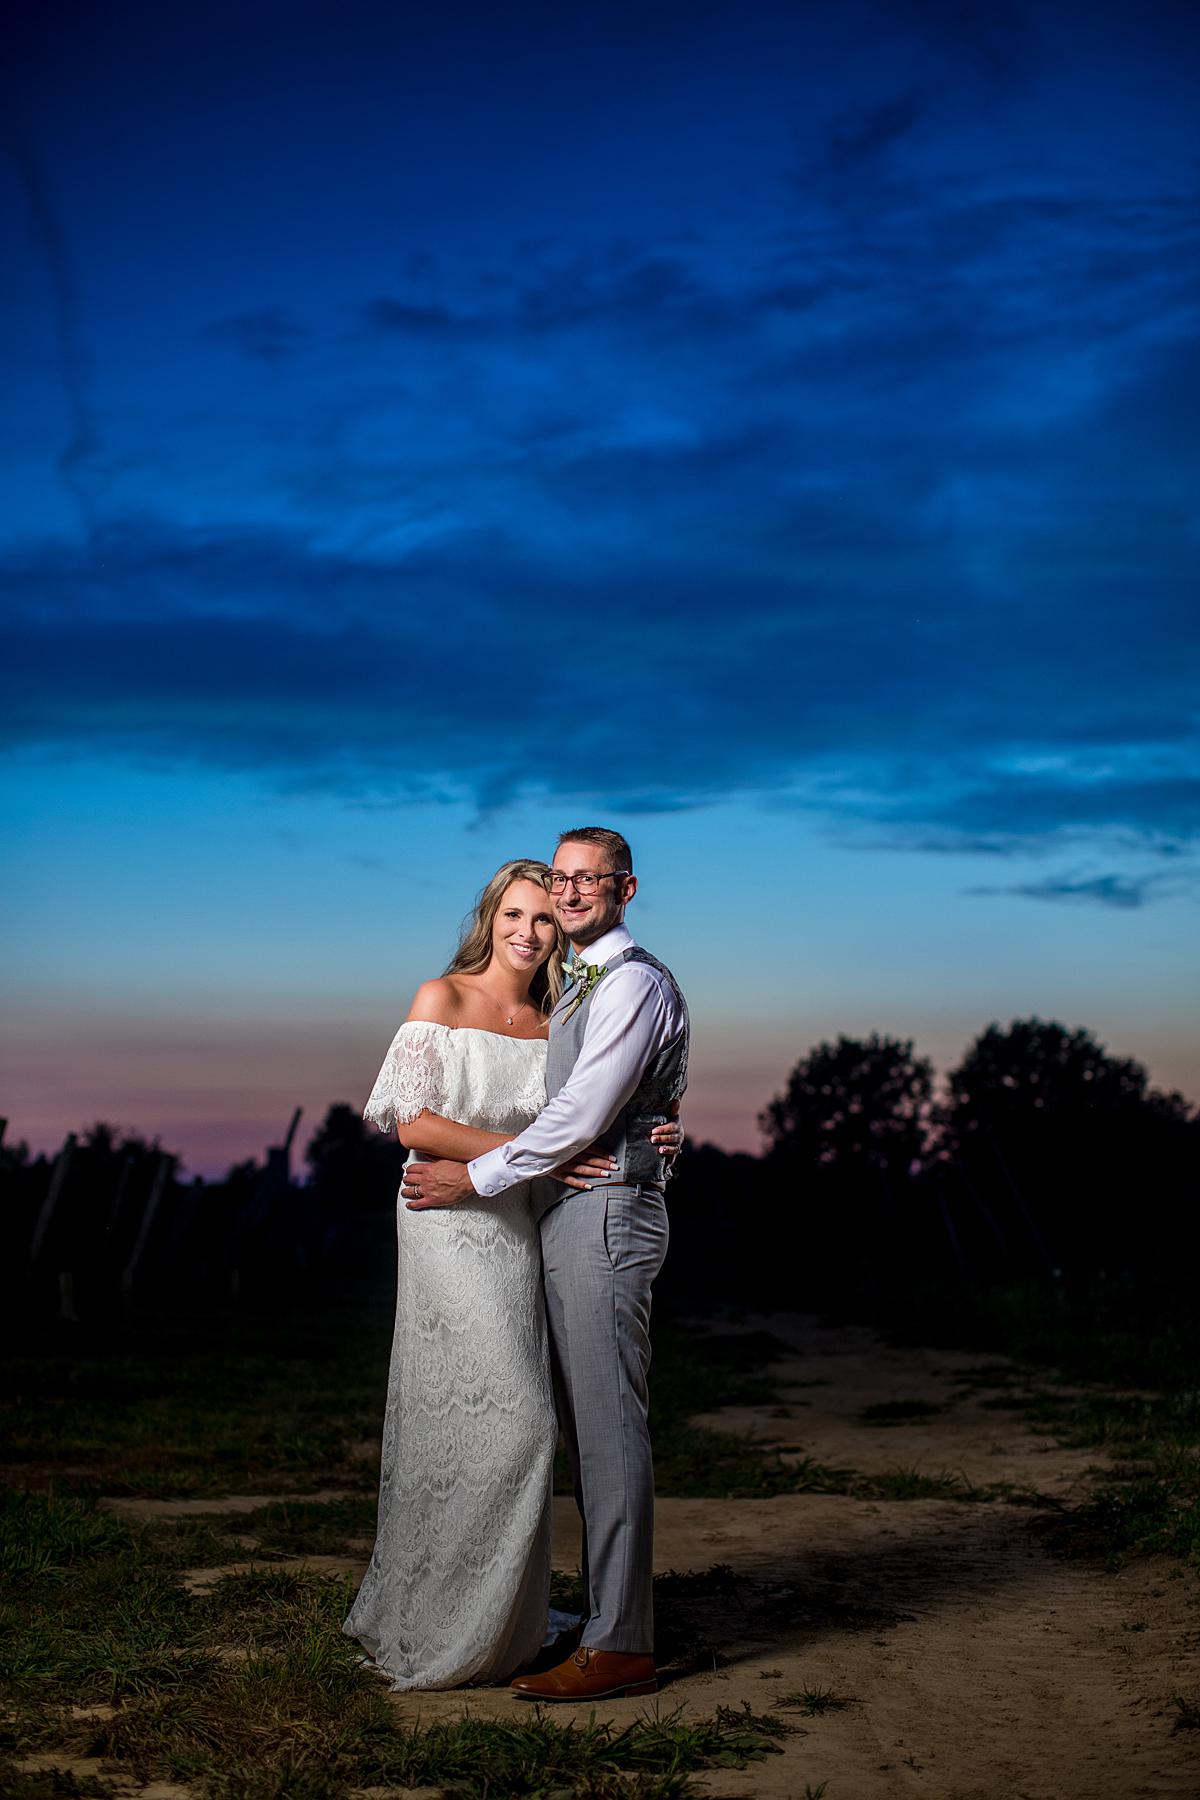 Cherry Barc farm wedding photographs